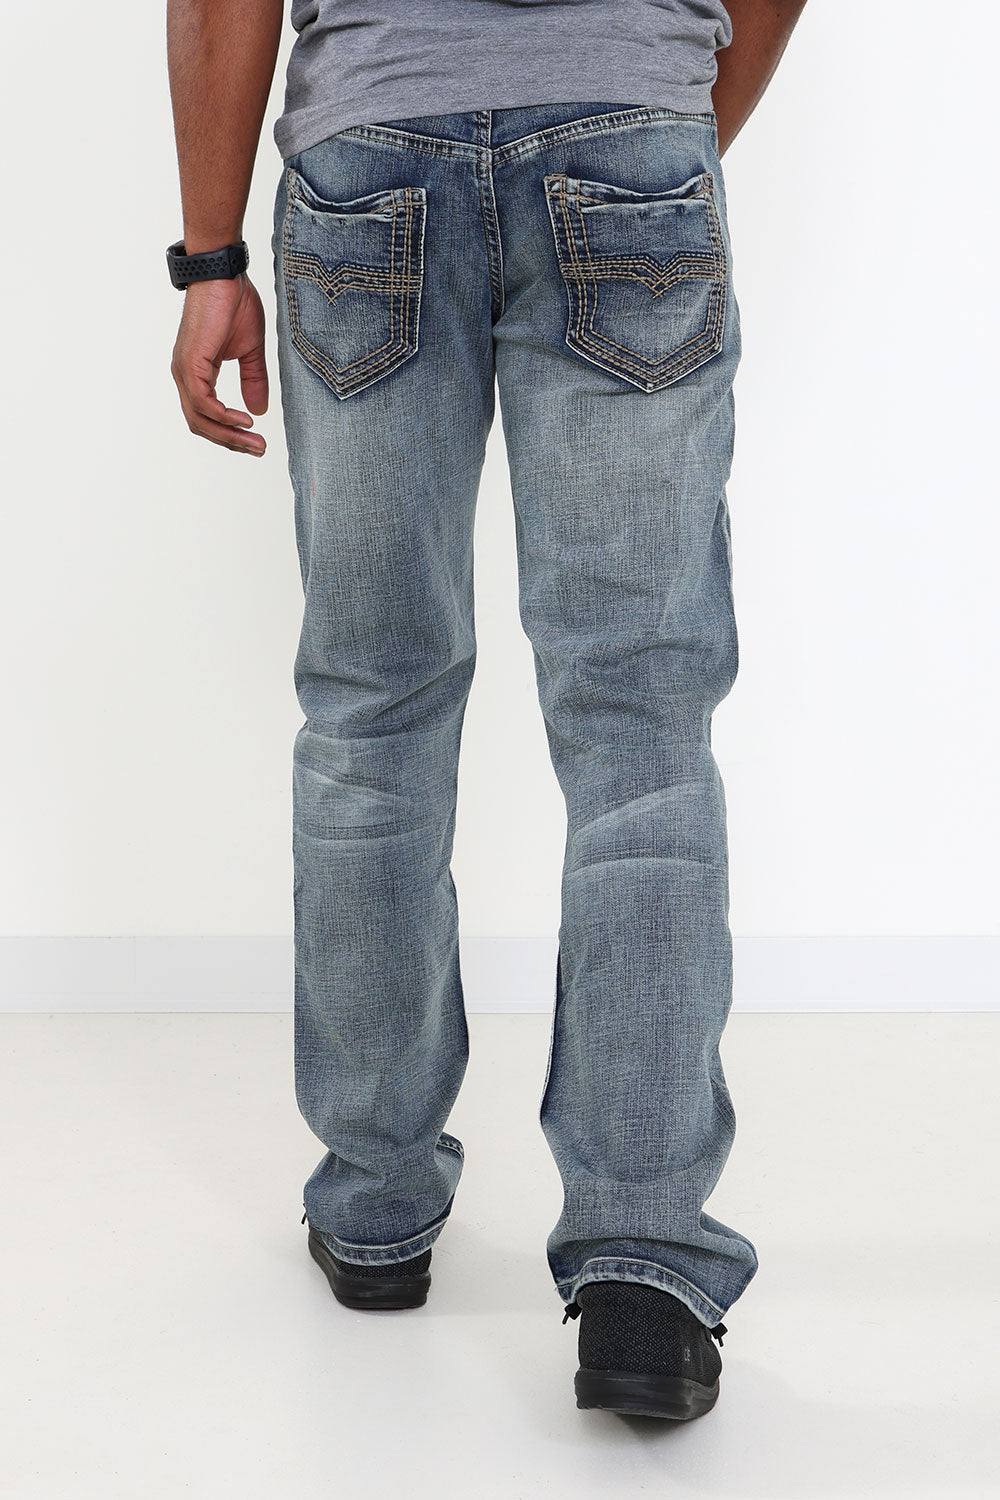 1897 Denim Weston Bootcut Jeans for Men – Glik\'s